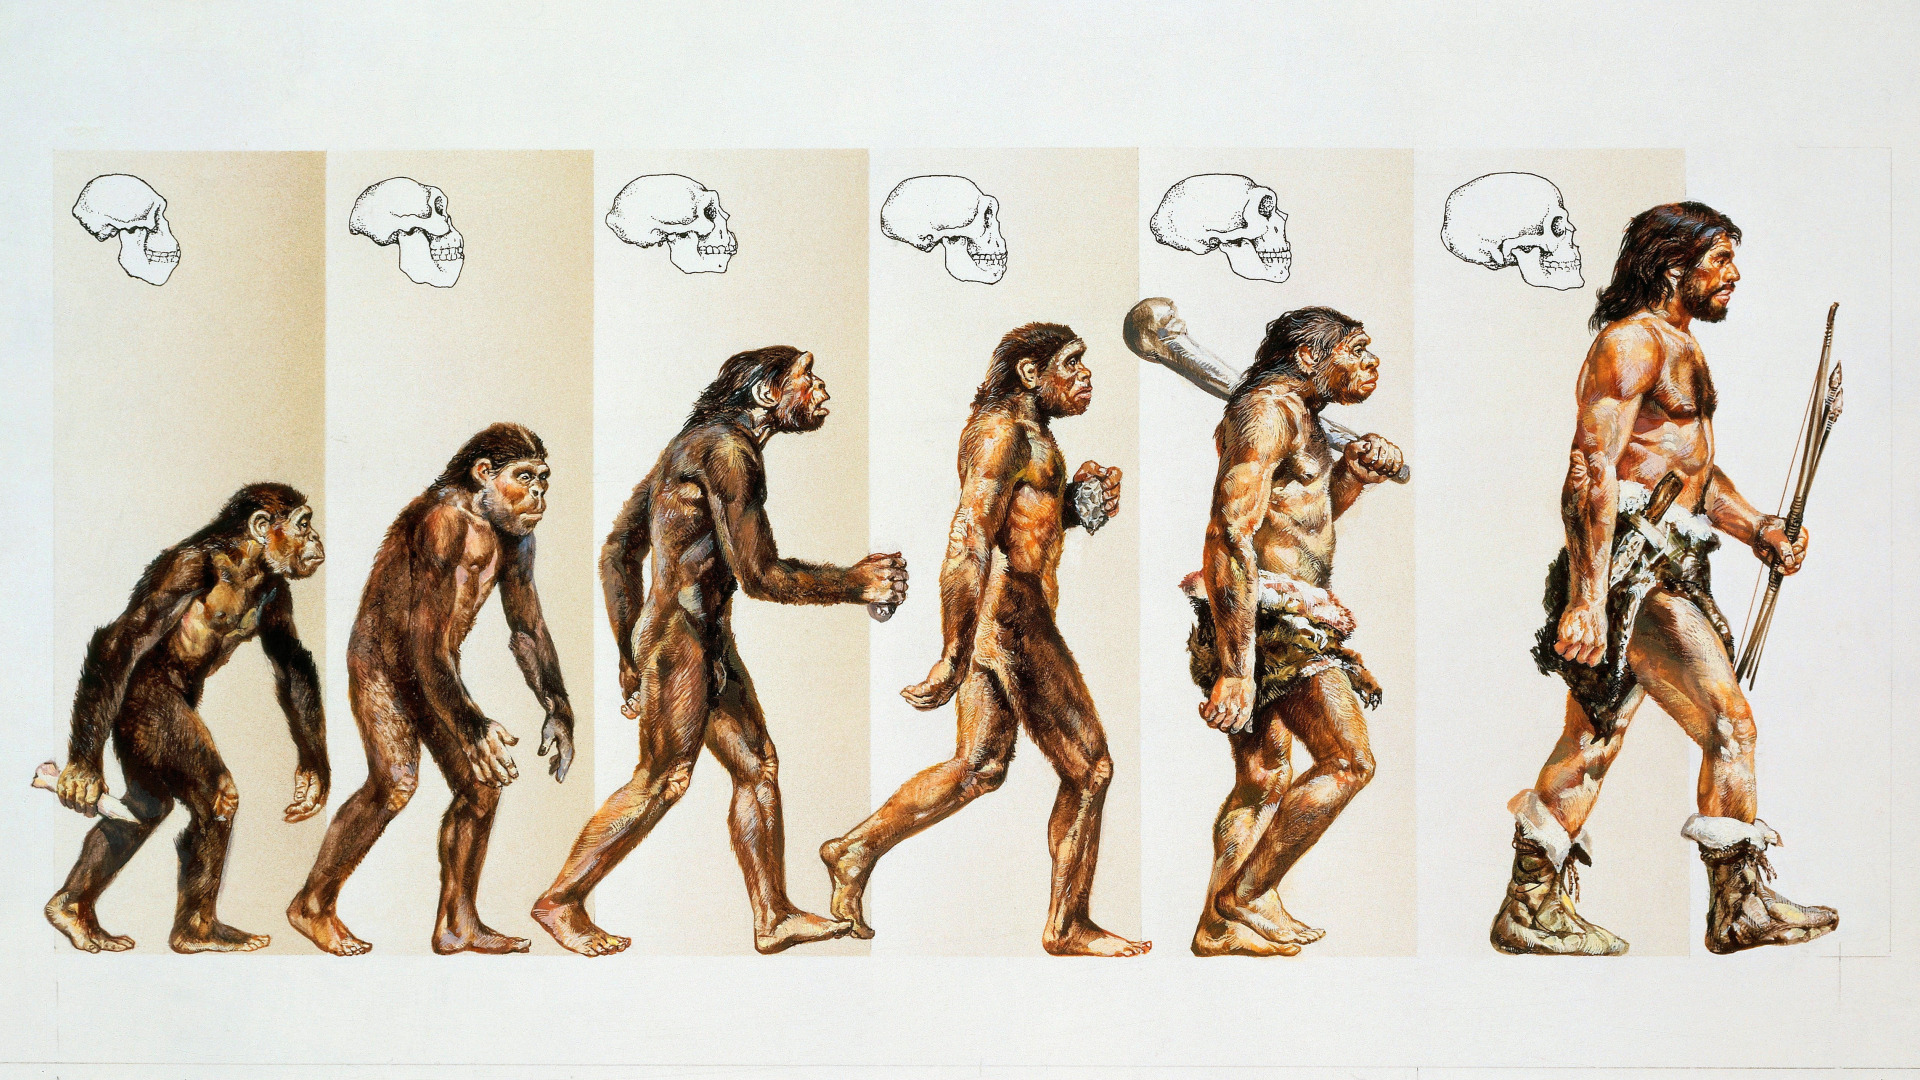 Новый этап эволюции. Хомо сапиенс Эволюция. Теория Дарвина о эволюции человека. Неандерталец и хомо сапиенс.